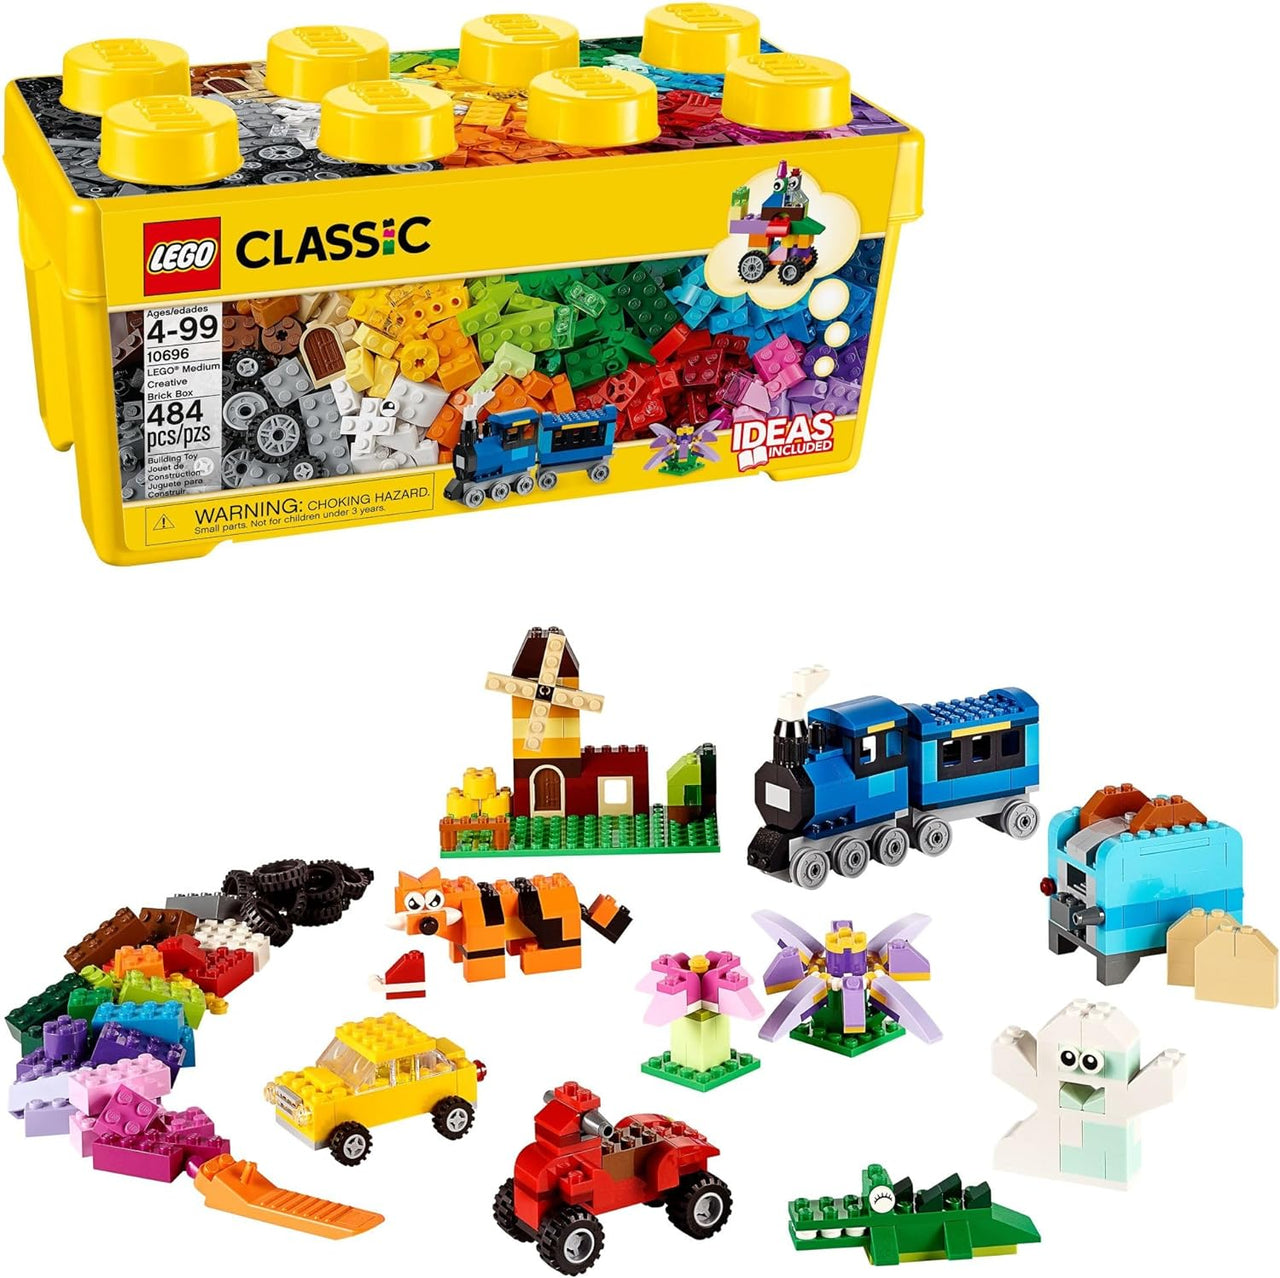 LEGO 10696 Classic Medium Creative Brick Box Building Set with Storage